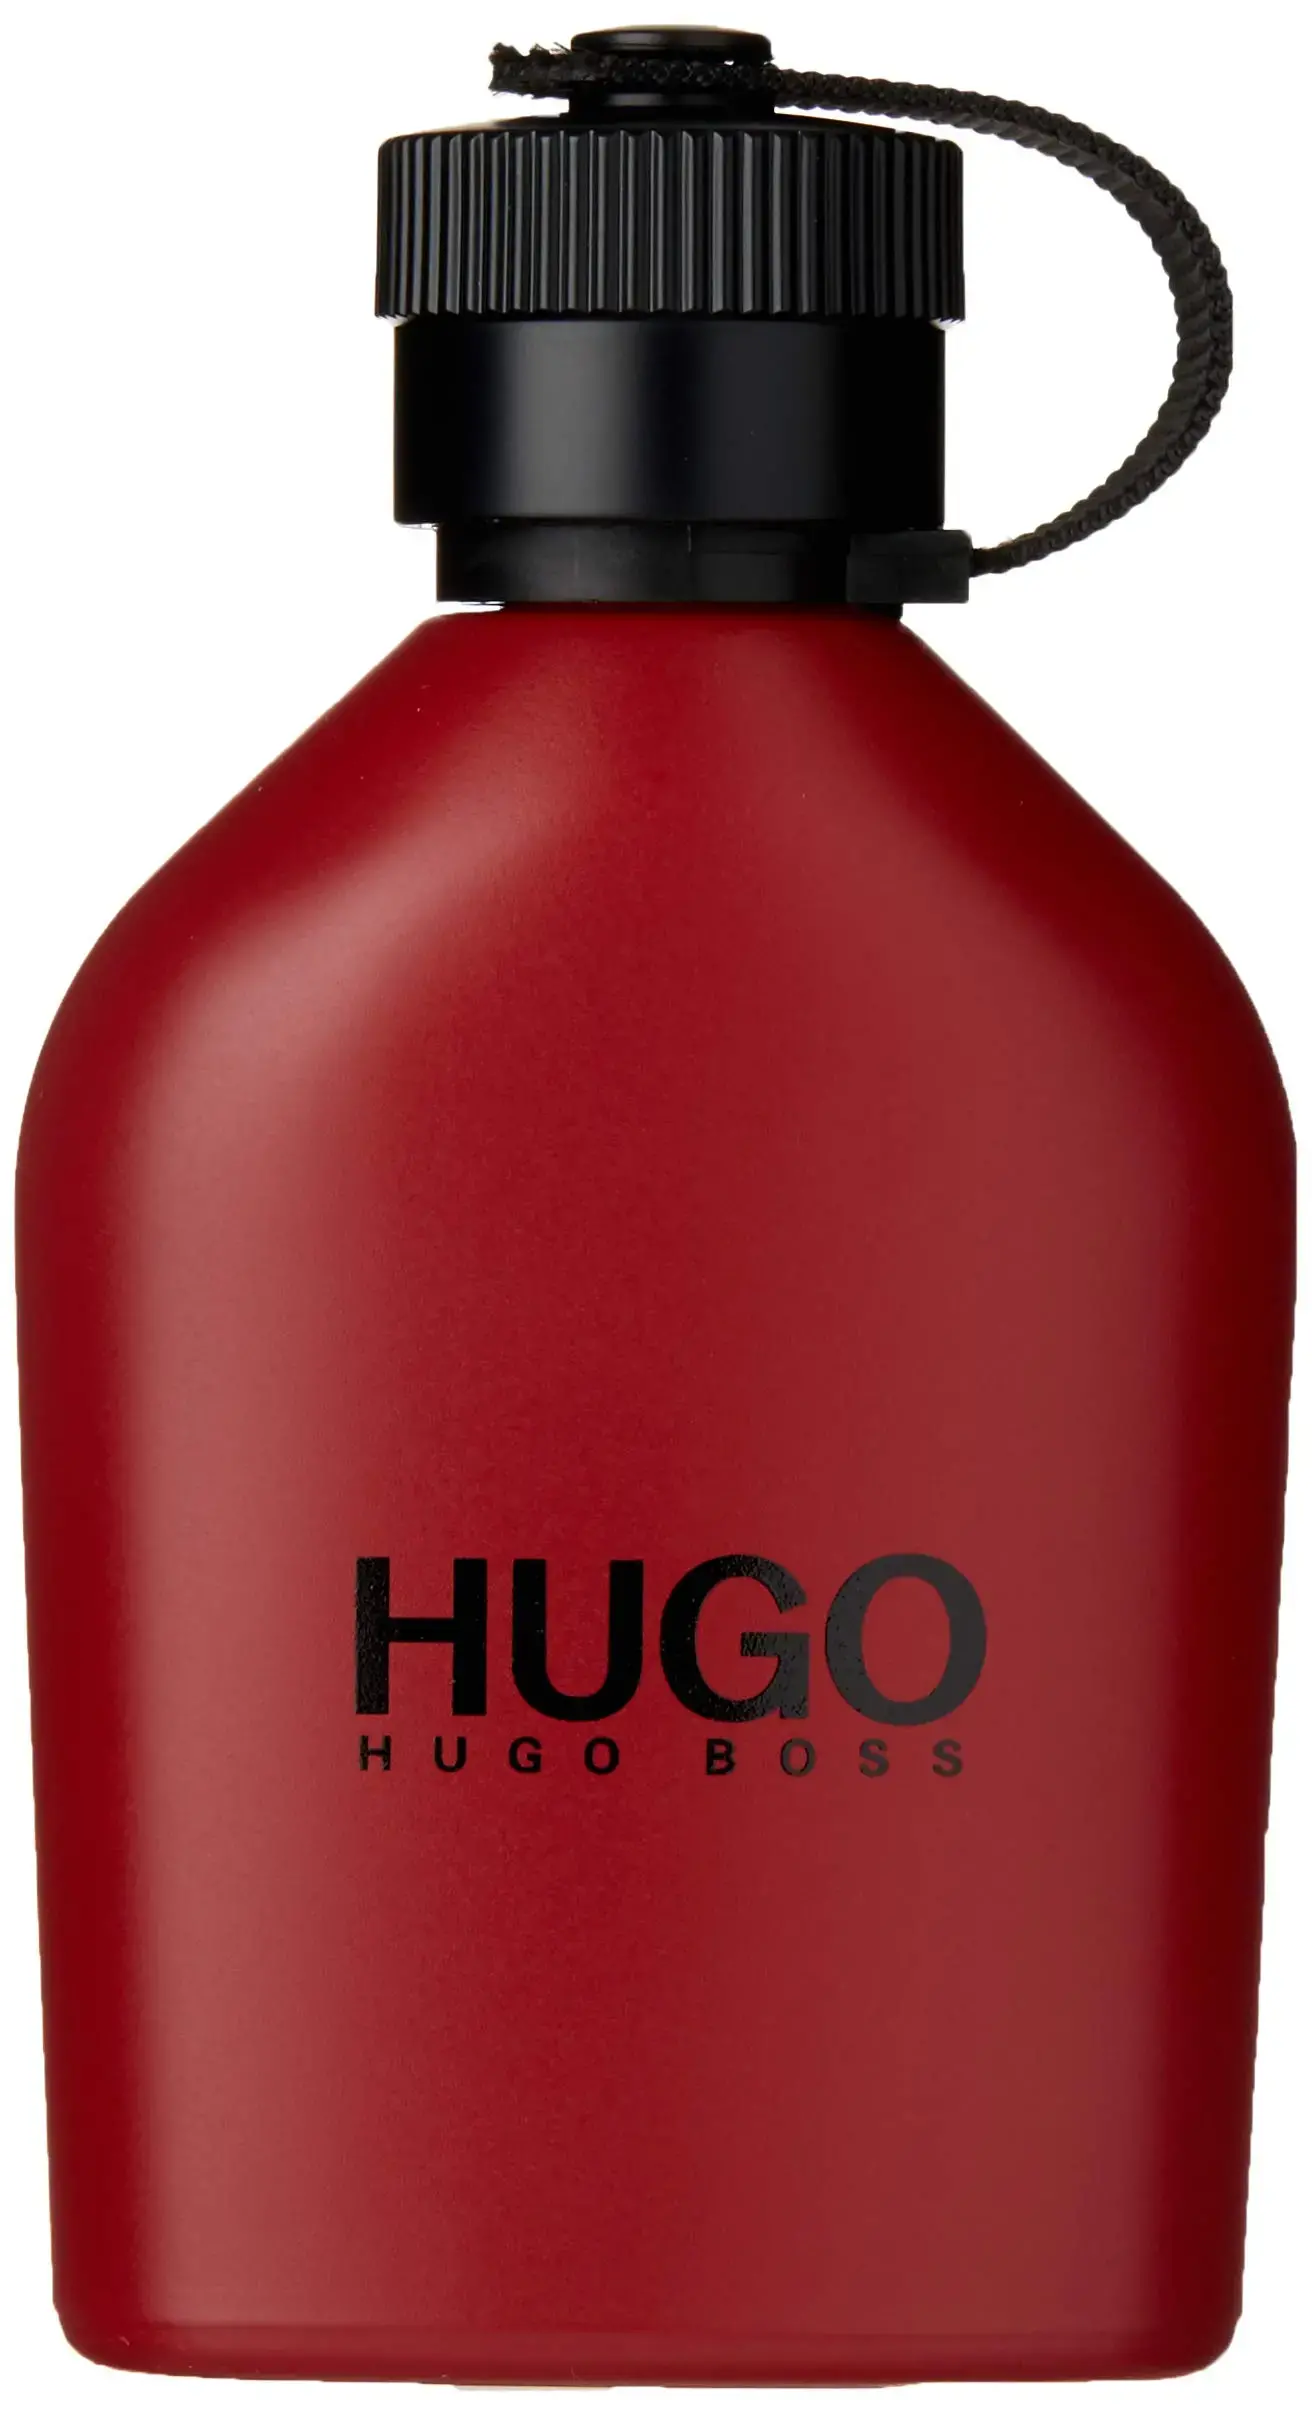 Hugo Boss Red Eau de Toilette. Hugo Boss "Hugo Red" EDT, 100ml. Hugo Boss man 125 ml. Hugo Boss Hugo Red men. Хьюго босс ред